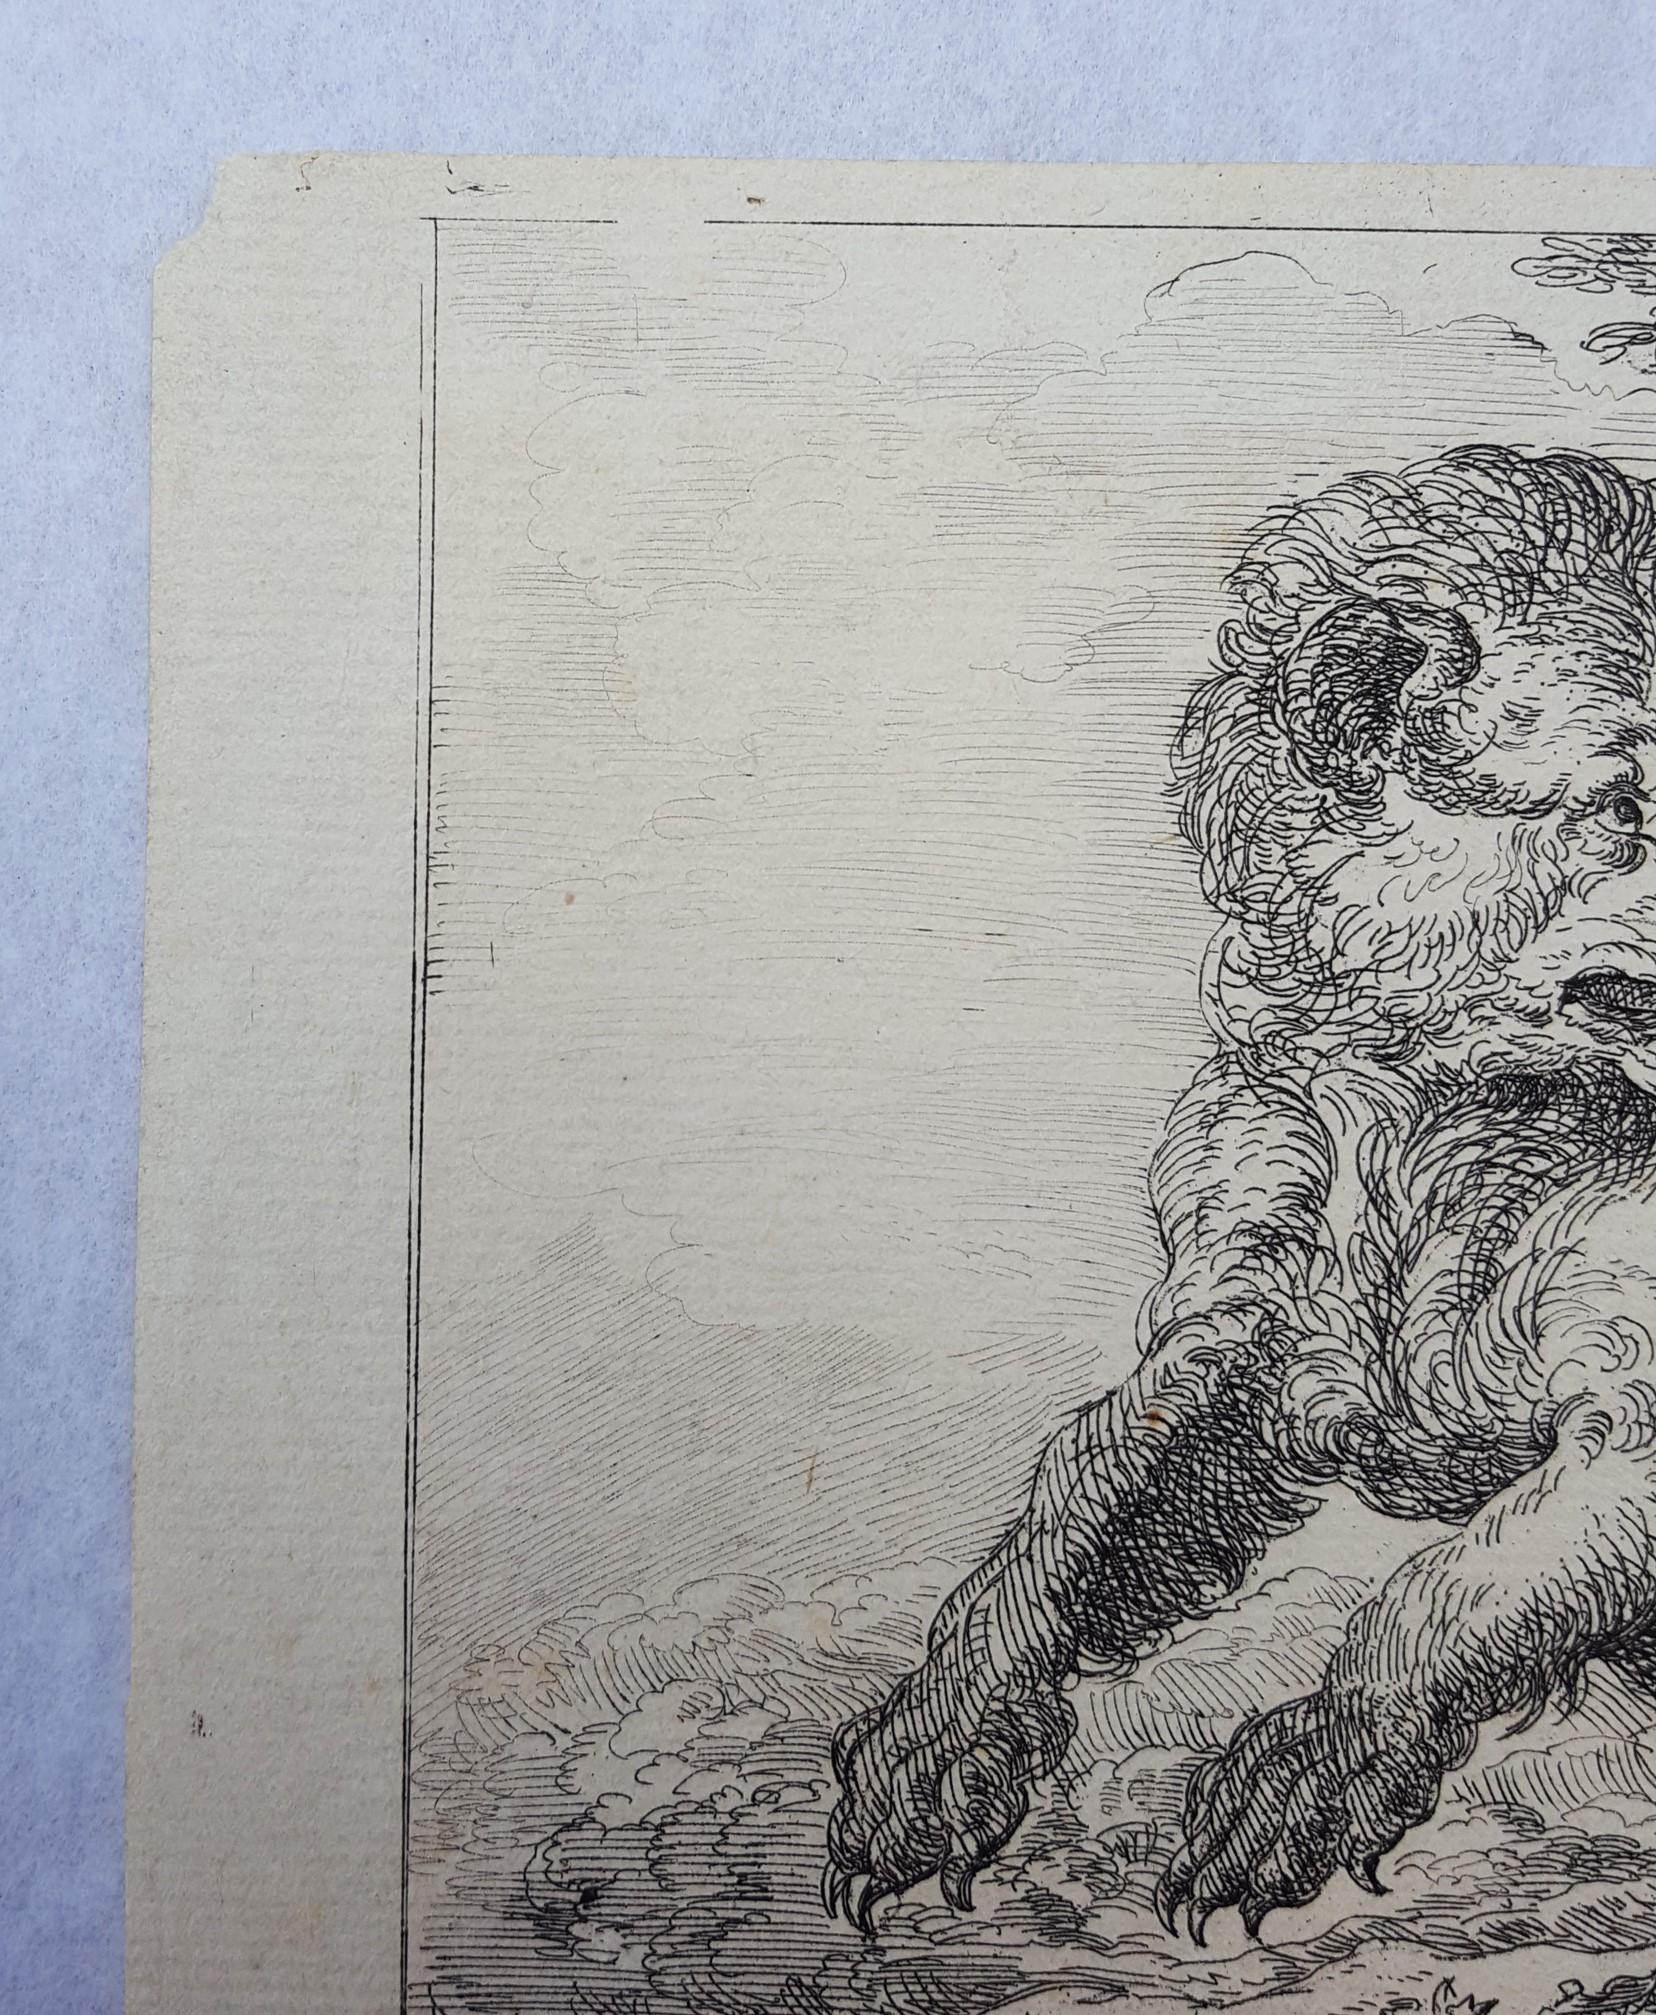 Honden Jagen Op Een Beer (Hounds Hunting a Bear) /// Paysage de vieux maîtres chiens - Gris Animal Print par Abraham Hondius